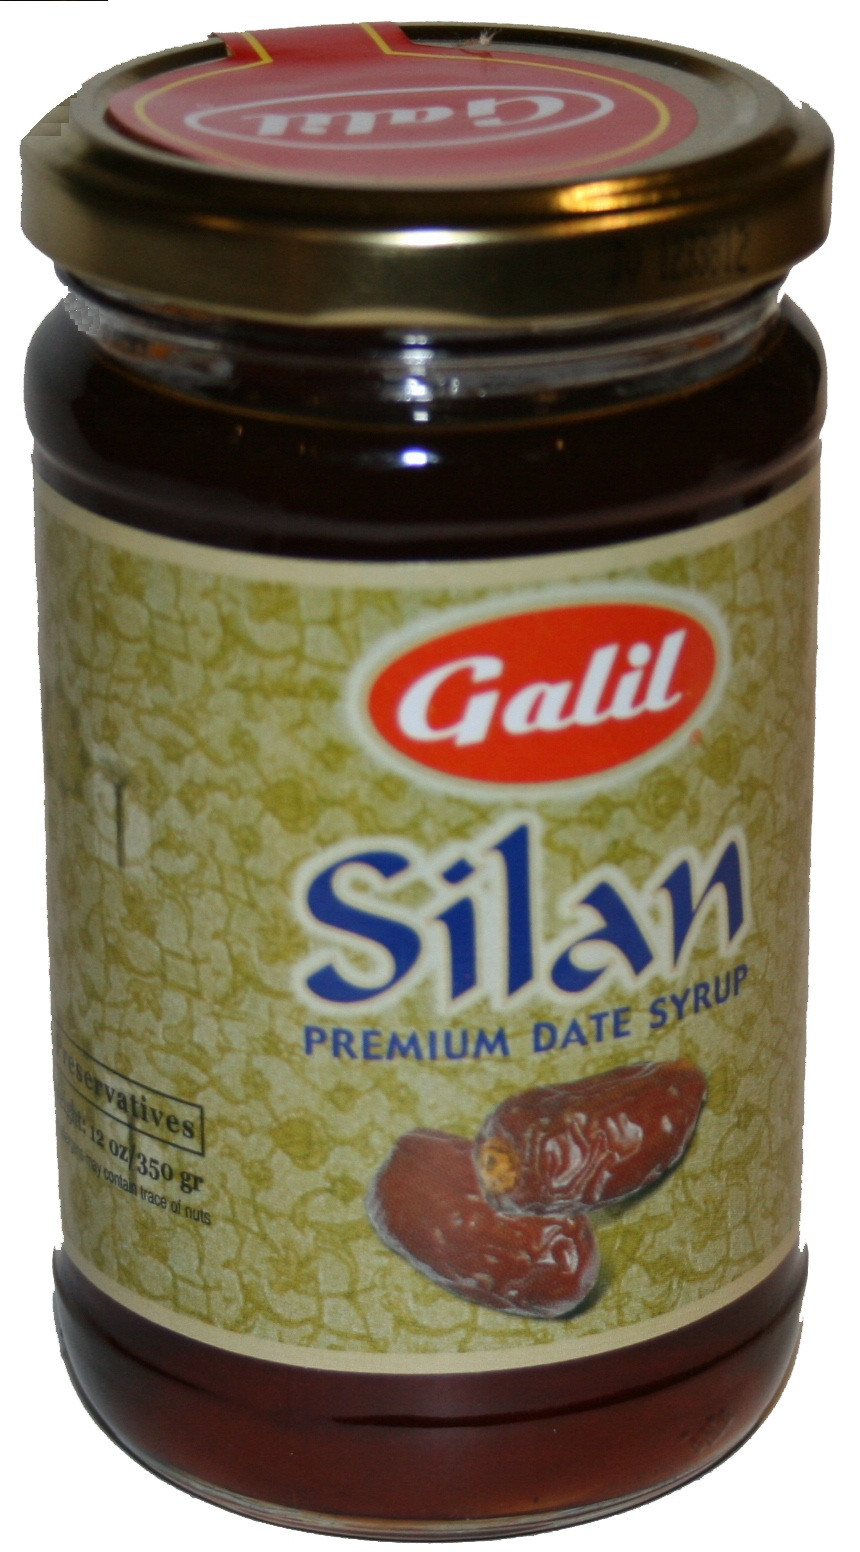 Silan Premium Date Syrup - Galil - Groceries By Israel